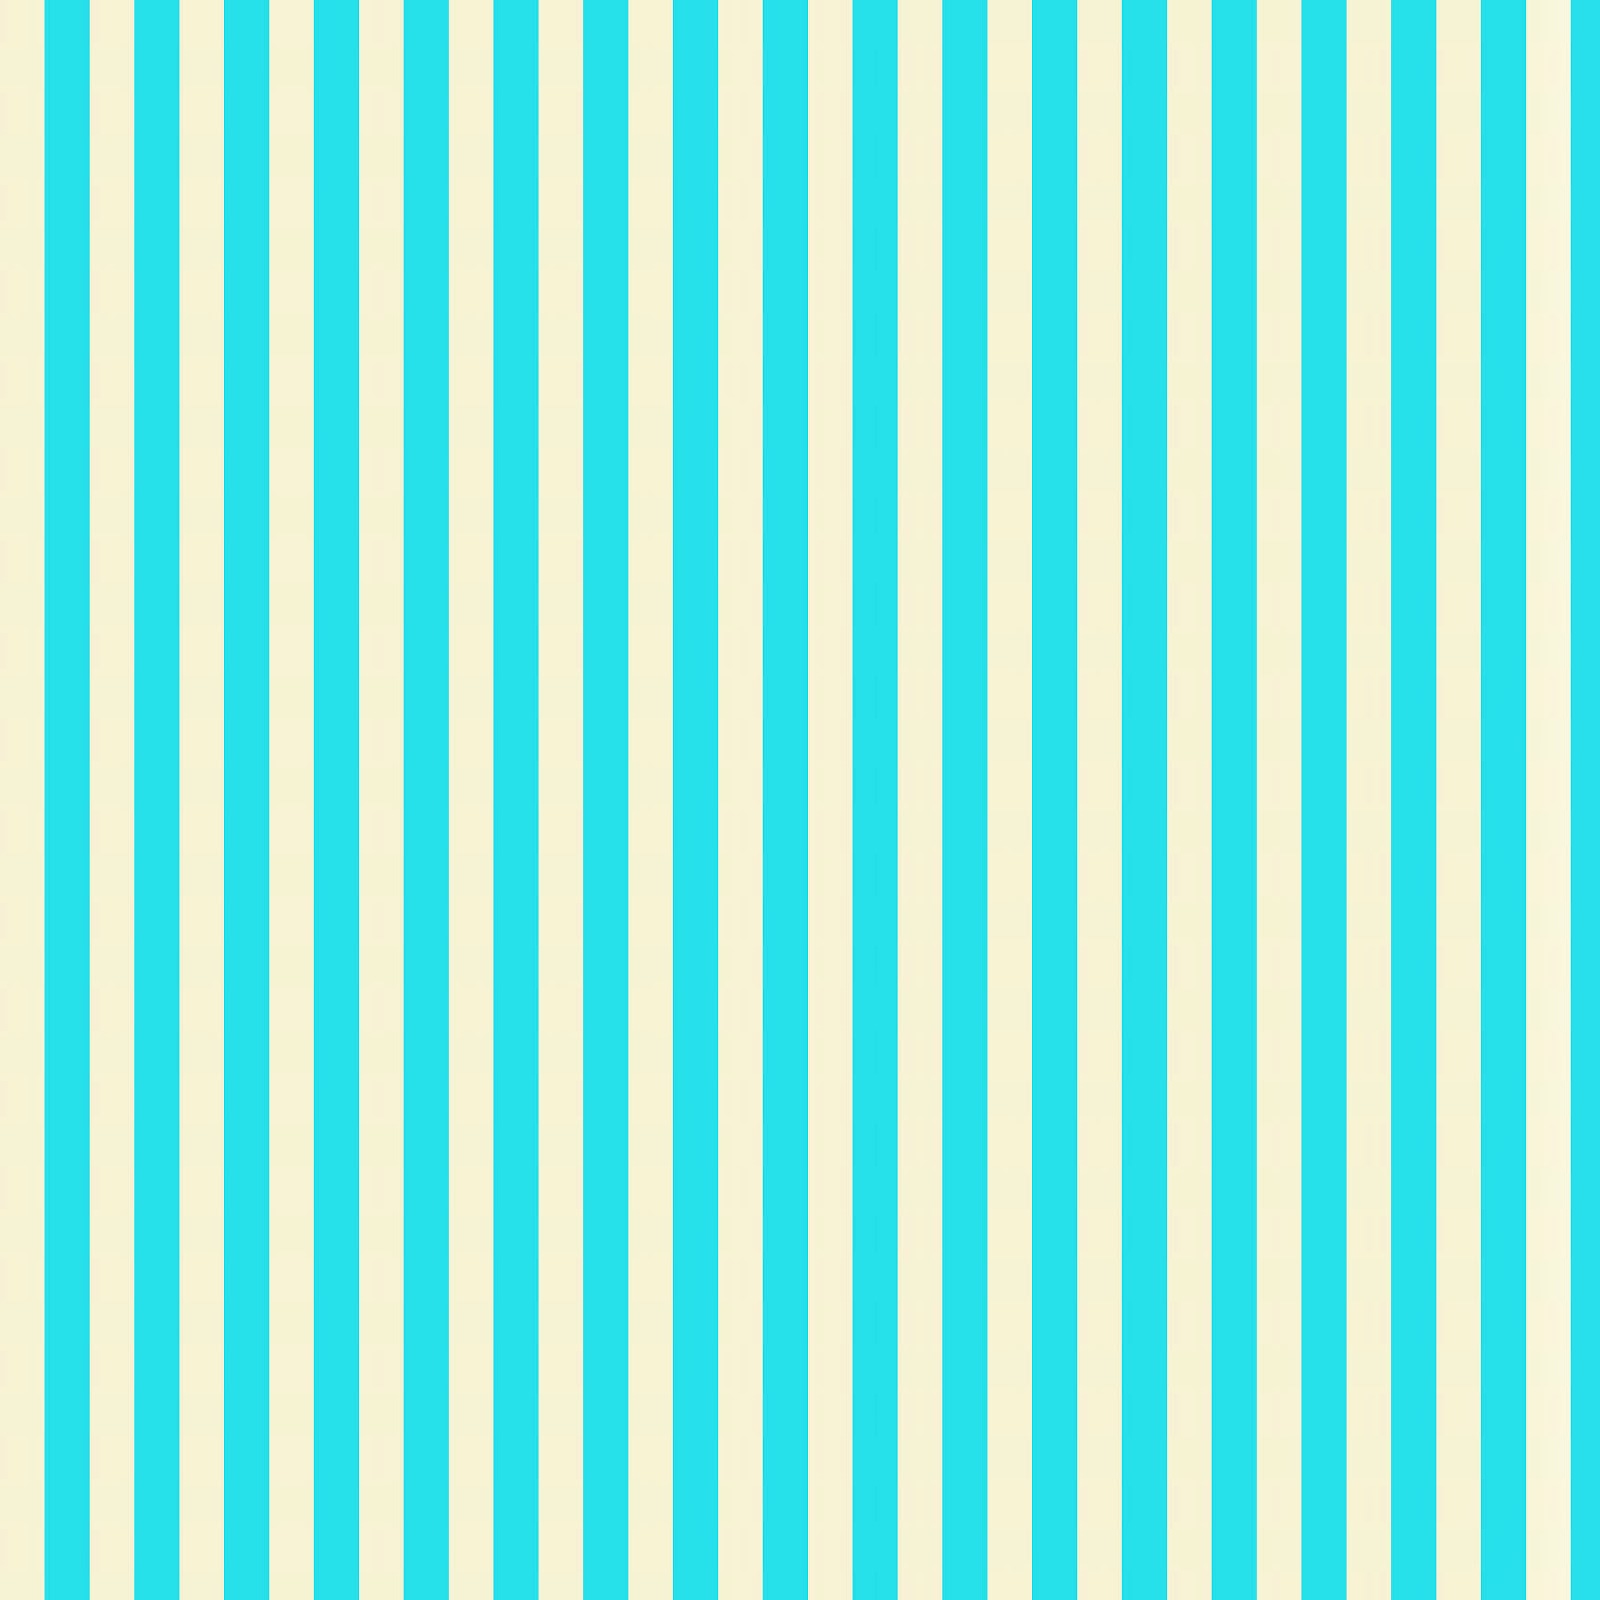 Stampin D'Amour: Free Digital Scrapbook Paper - Aqua & Cream Stripes